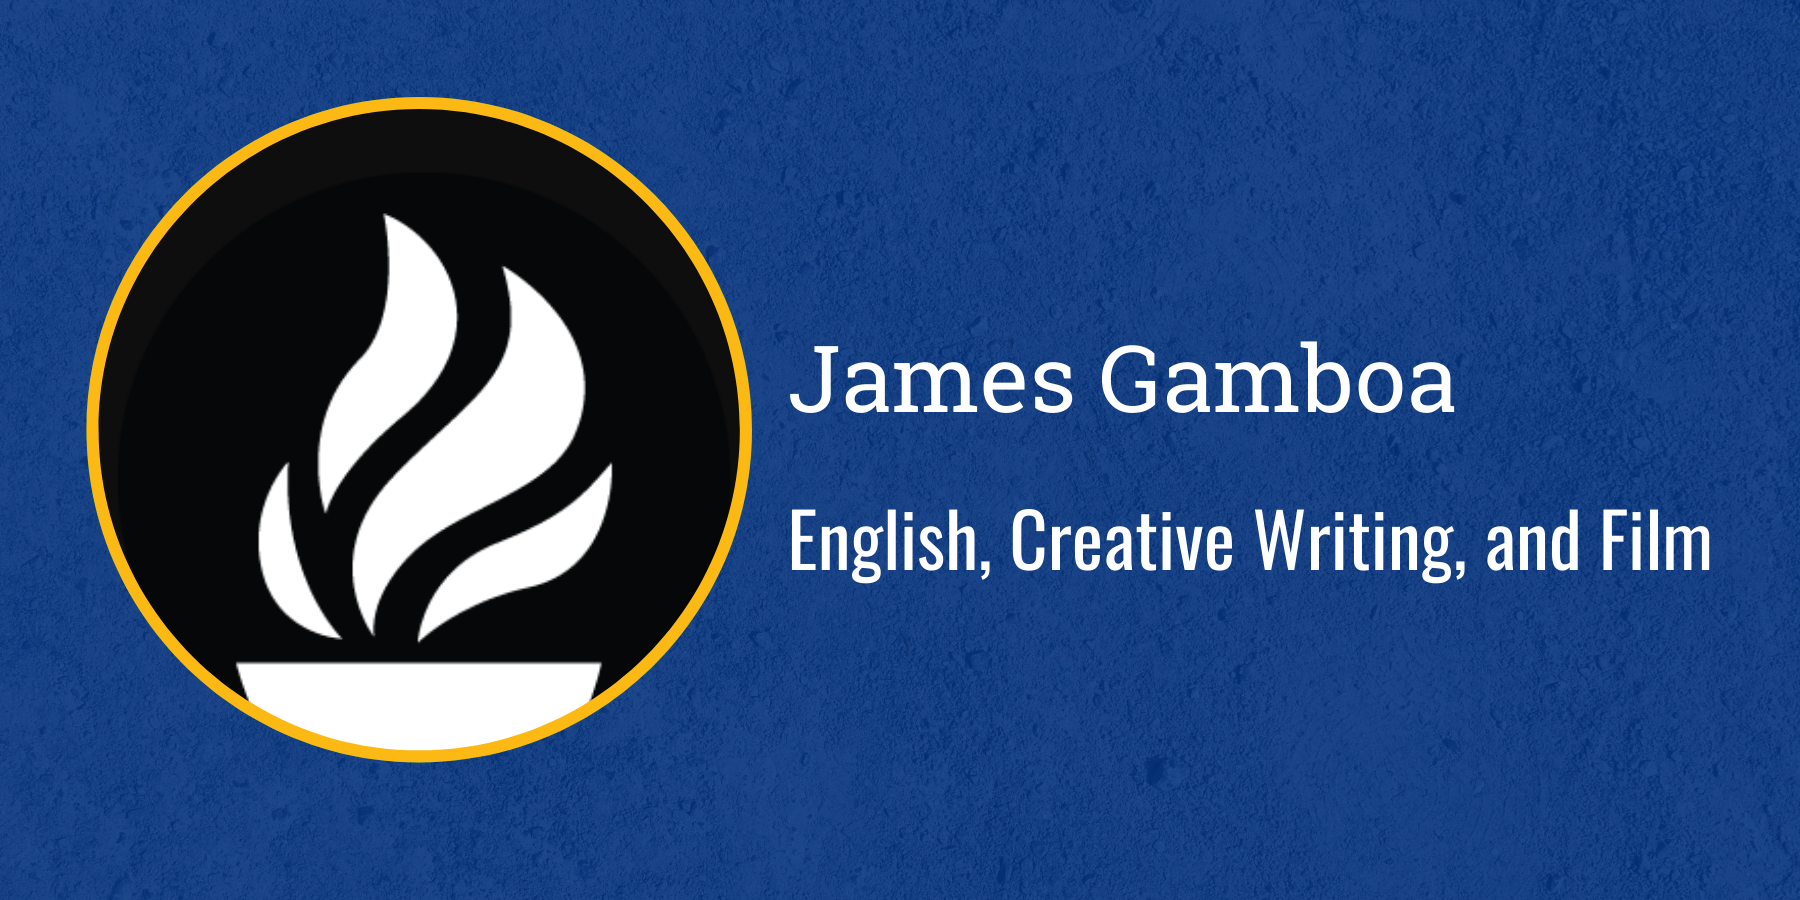 James Gamboa
English, Creative Writing